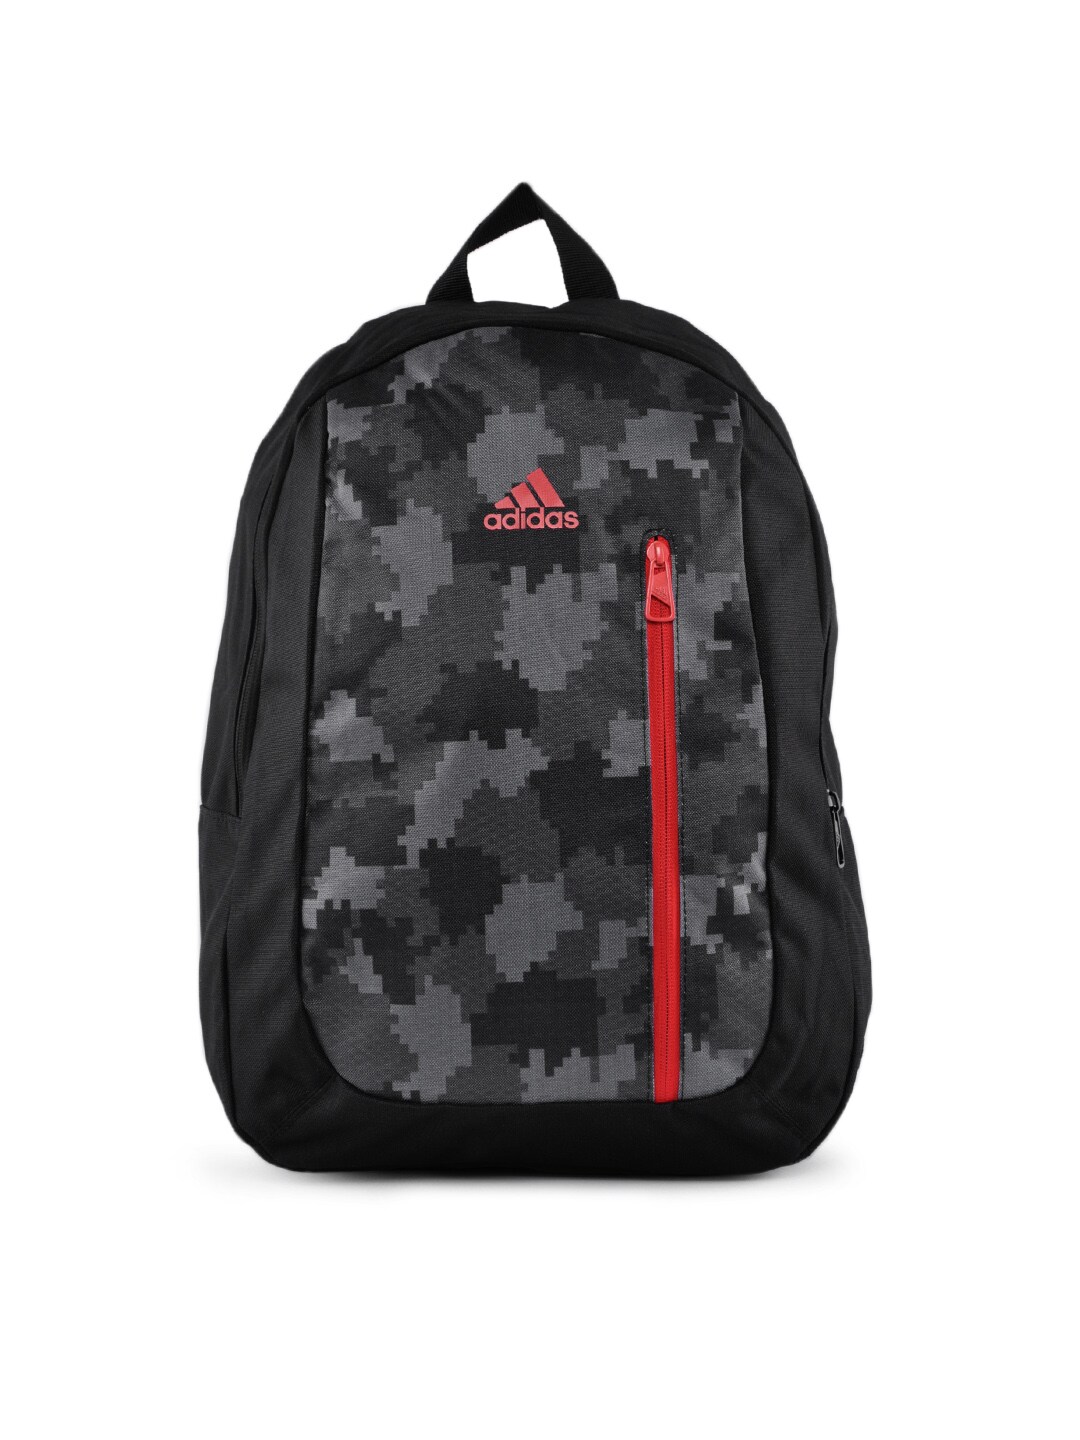 ADIDAS Unisex Black Casual Backpack